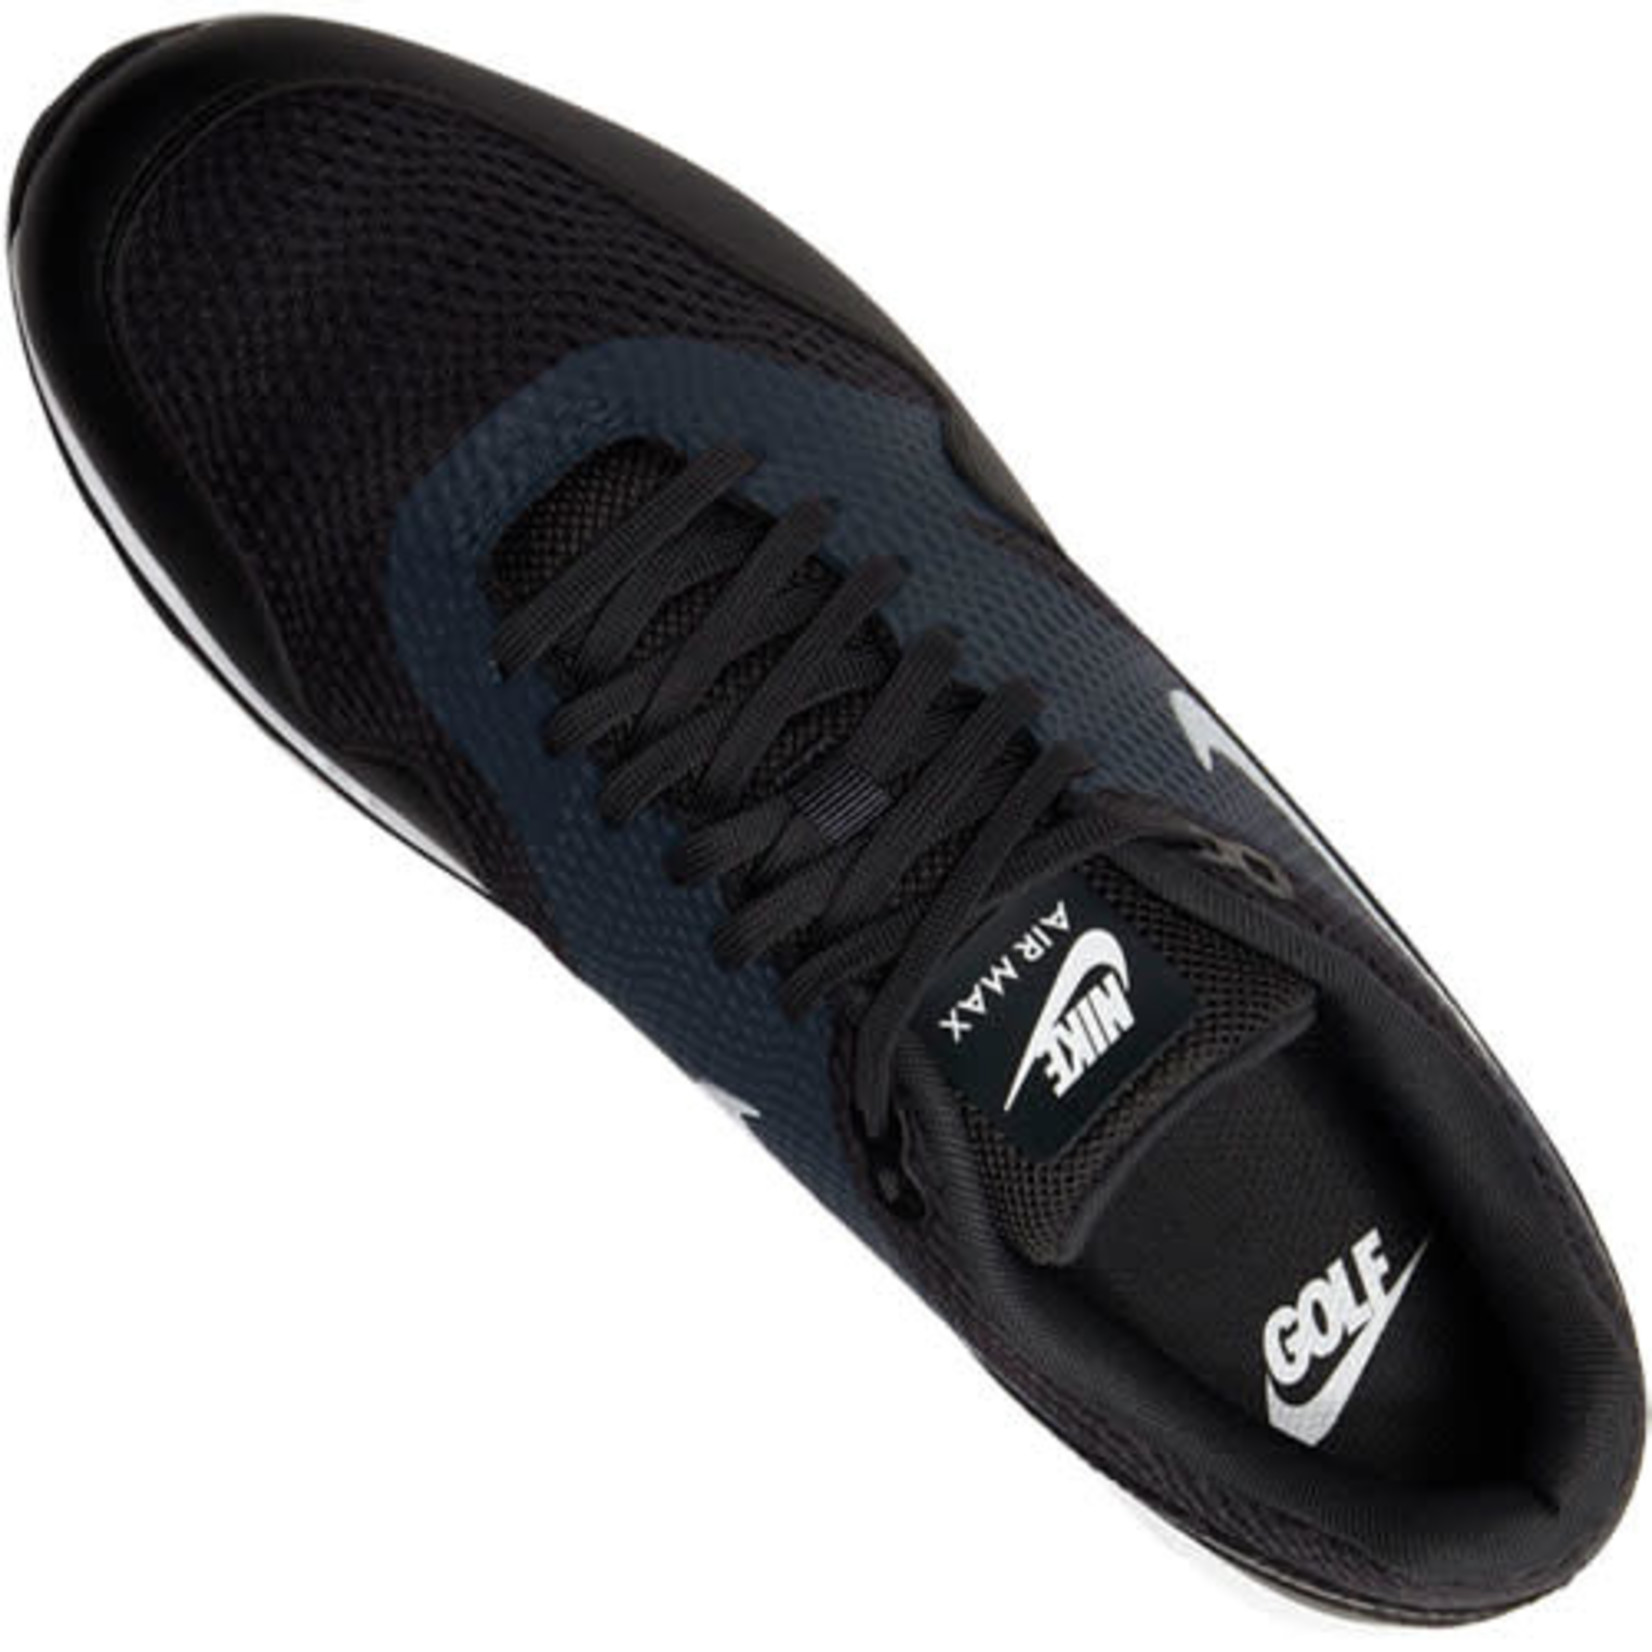 Nike Men's Nike Air Max 1G Spikeless Golf Shoe Black